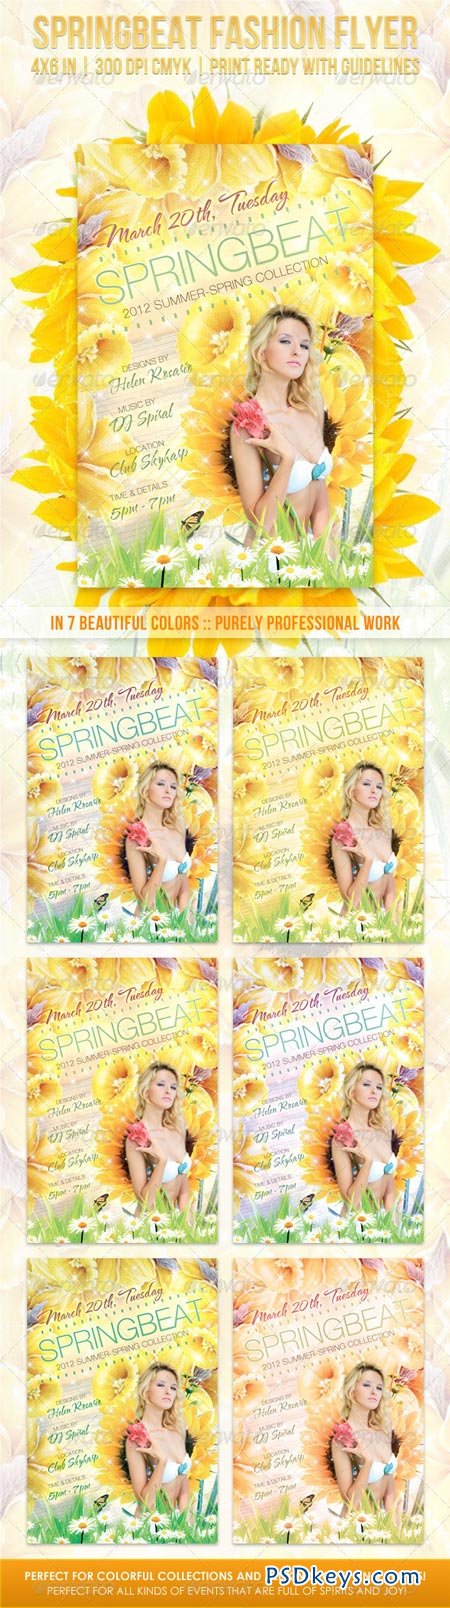 Springbeat Spring Fashion Flyer 1722738